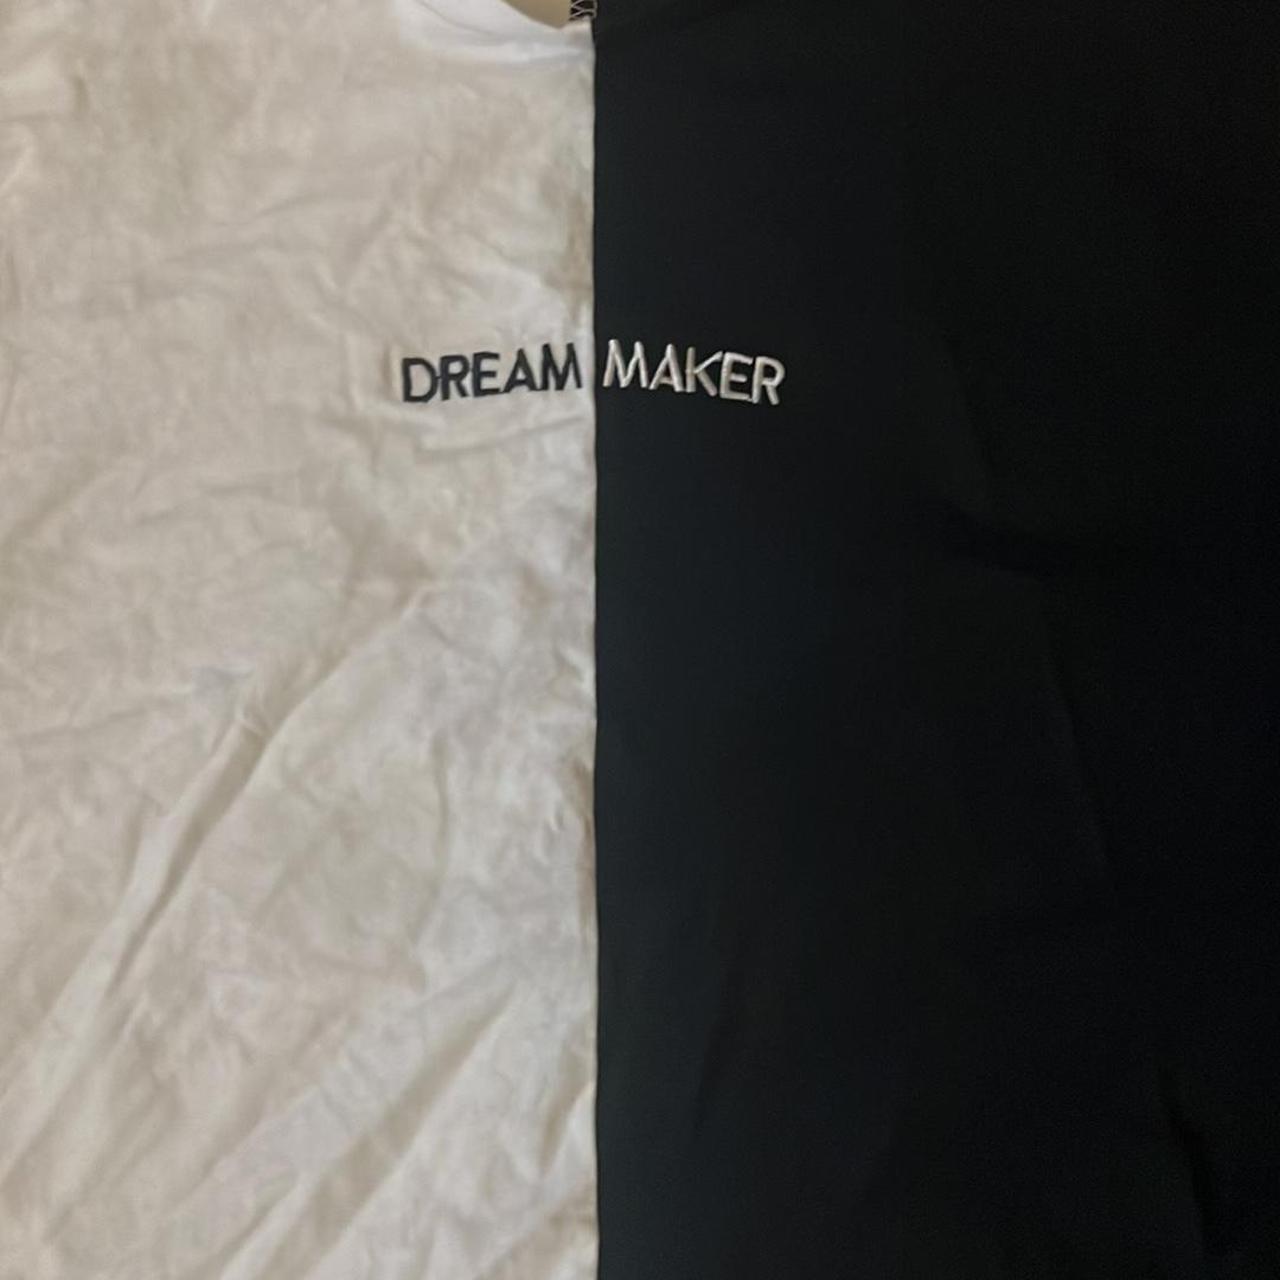 SHEIN, Shirts, Dream Maker Half White Half Black Tee